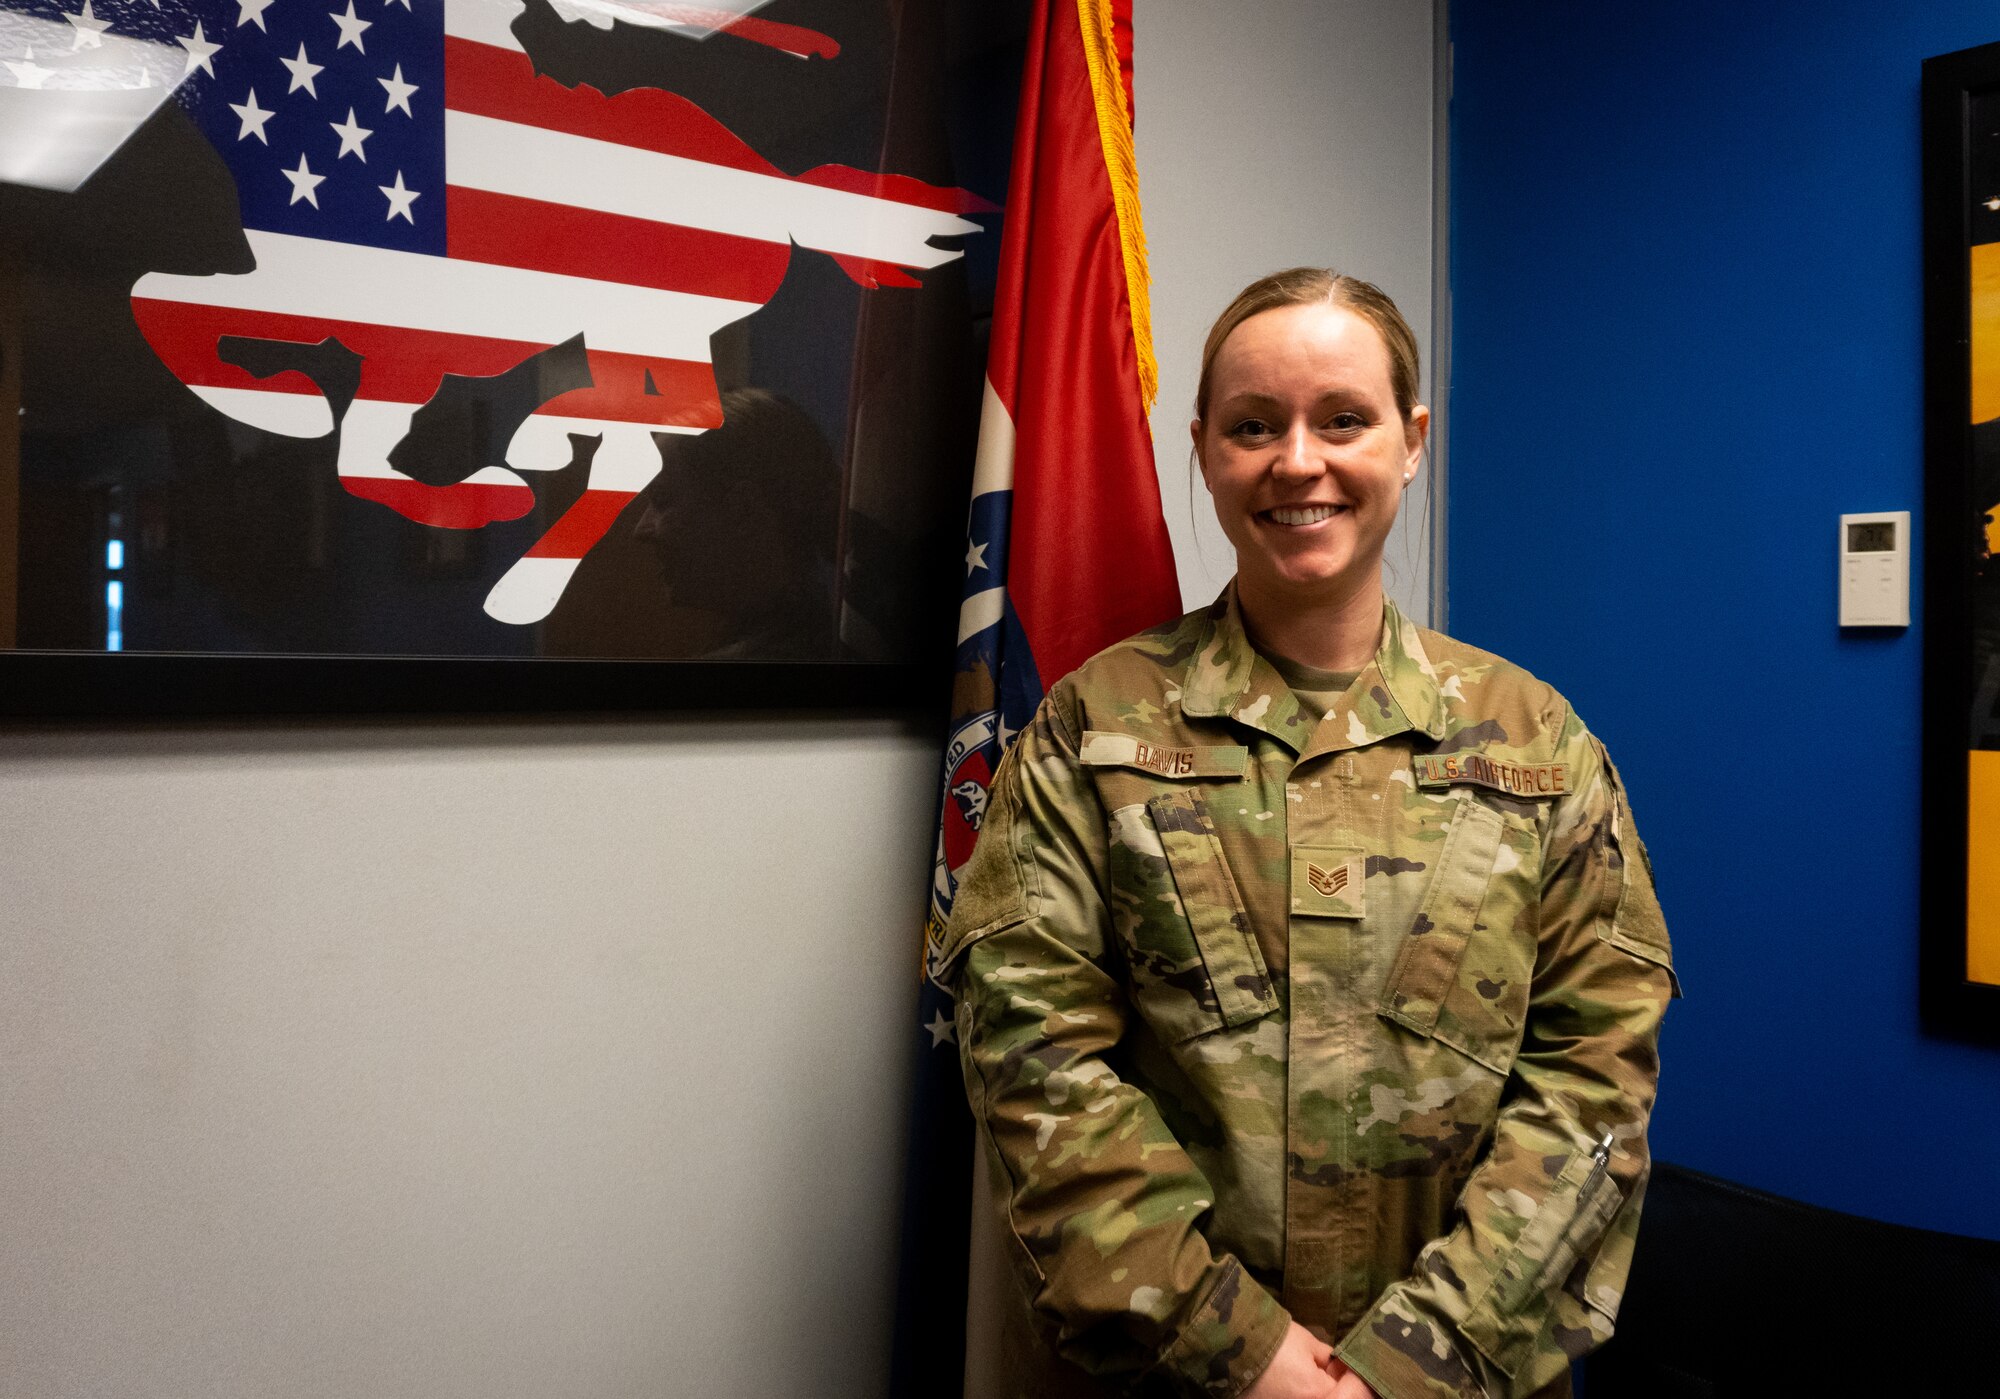 Krystaly Davis is the Top Missouri Air National Guard Recruiter